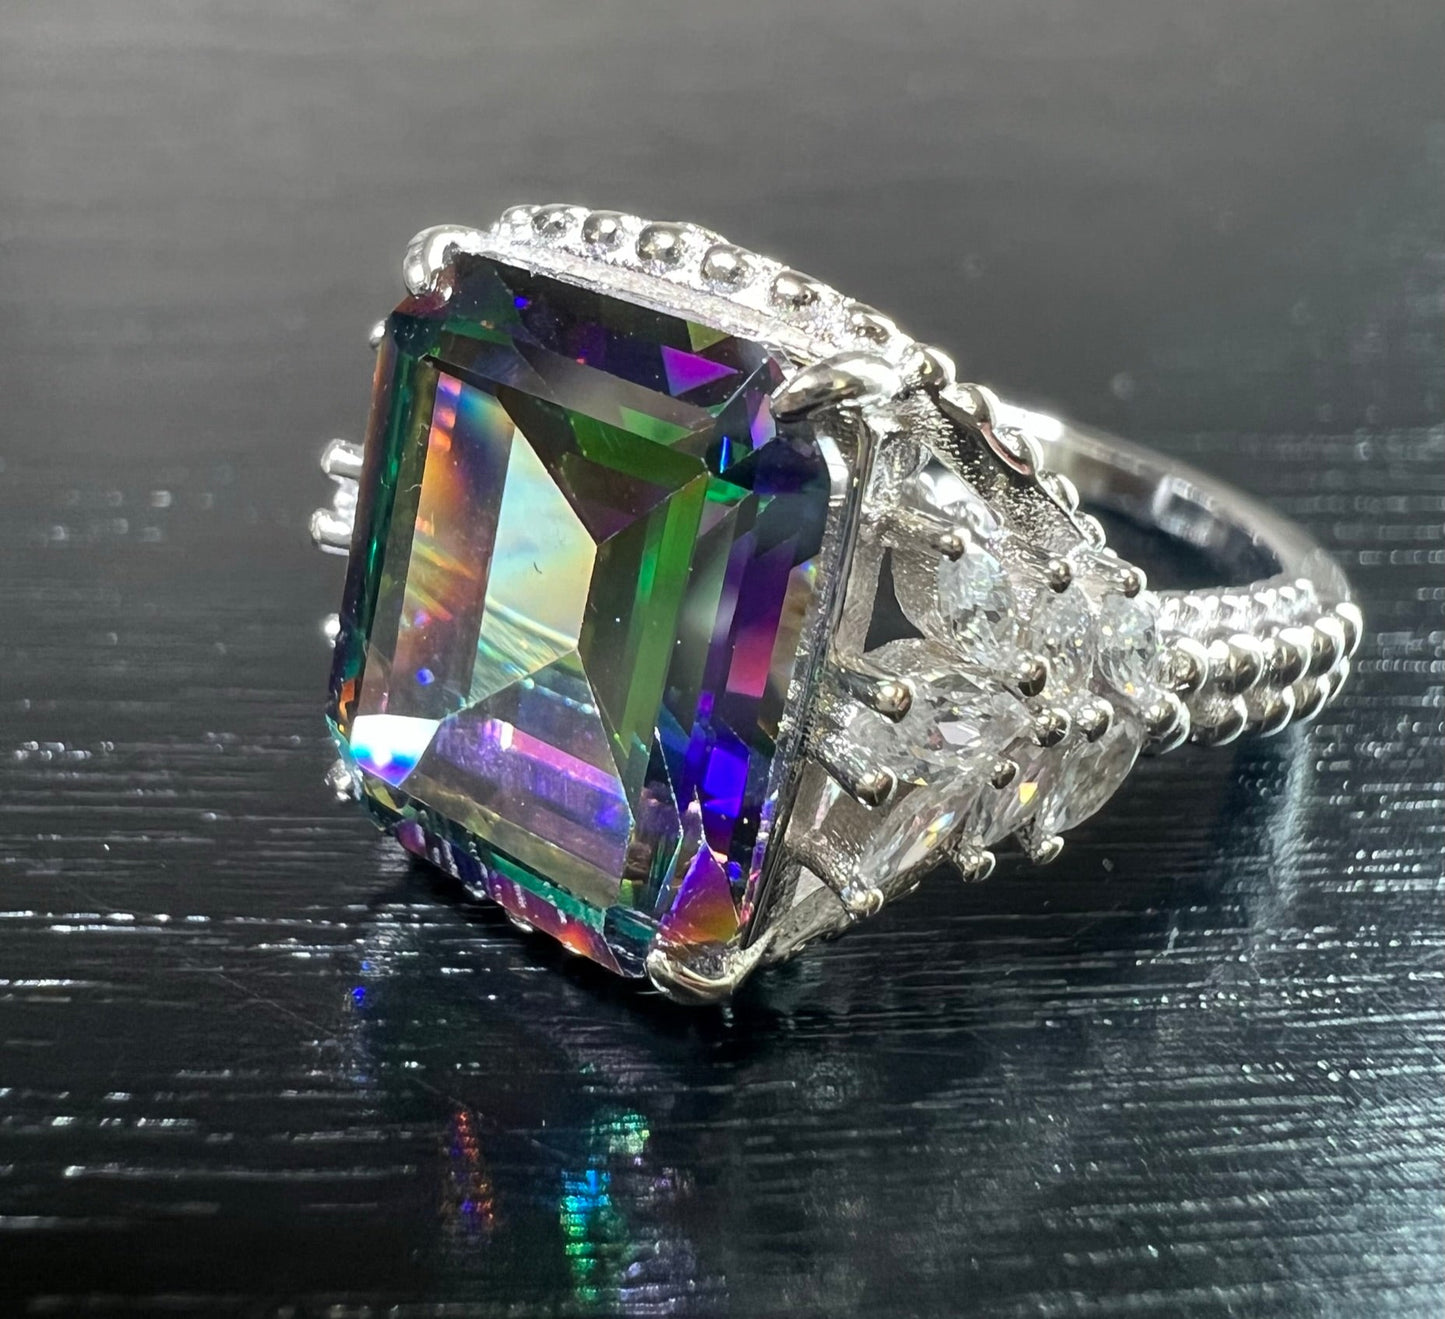 *PRE-ORDER - Emerald-Cut Rainbow Topaz Beaded Shank 925 Sterling Silver Ring